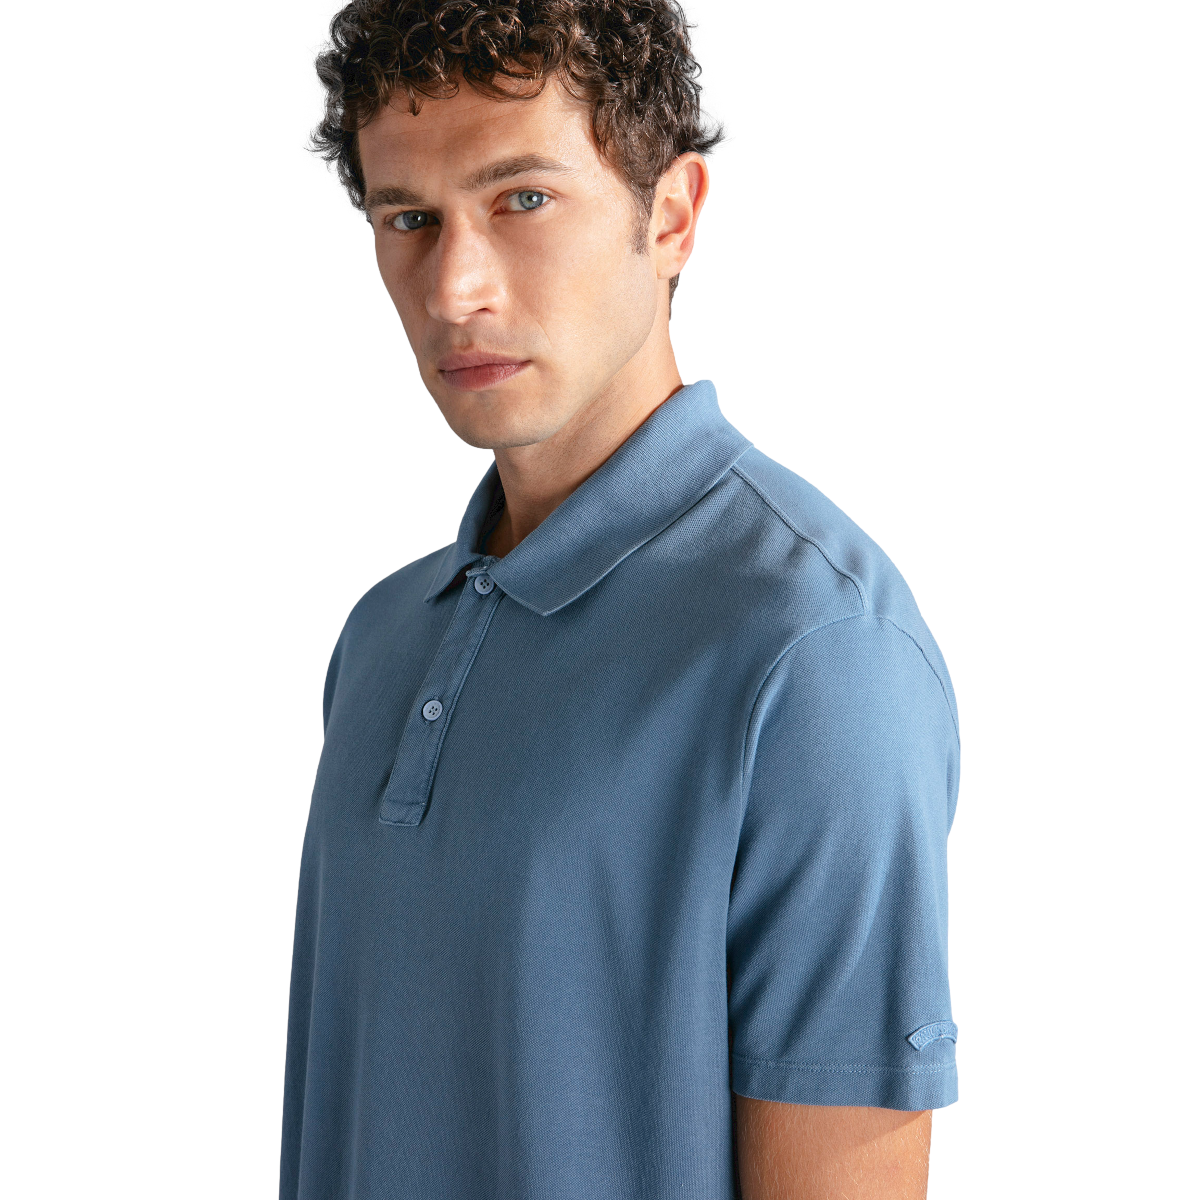 Paul & Shark GD Pique Cotton Polo Shirt 635 Dark Denim